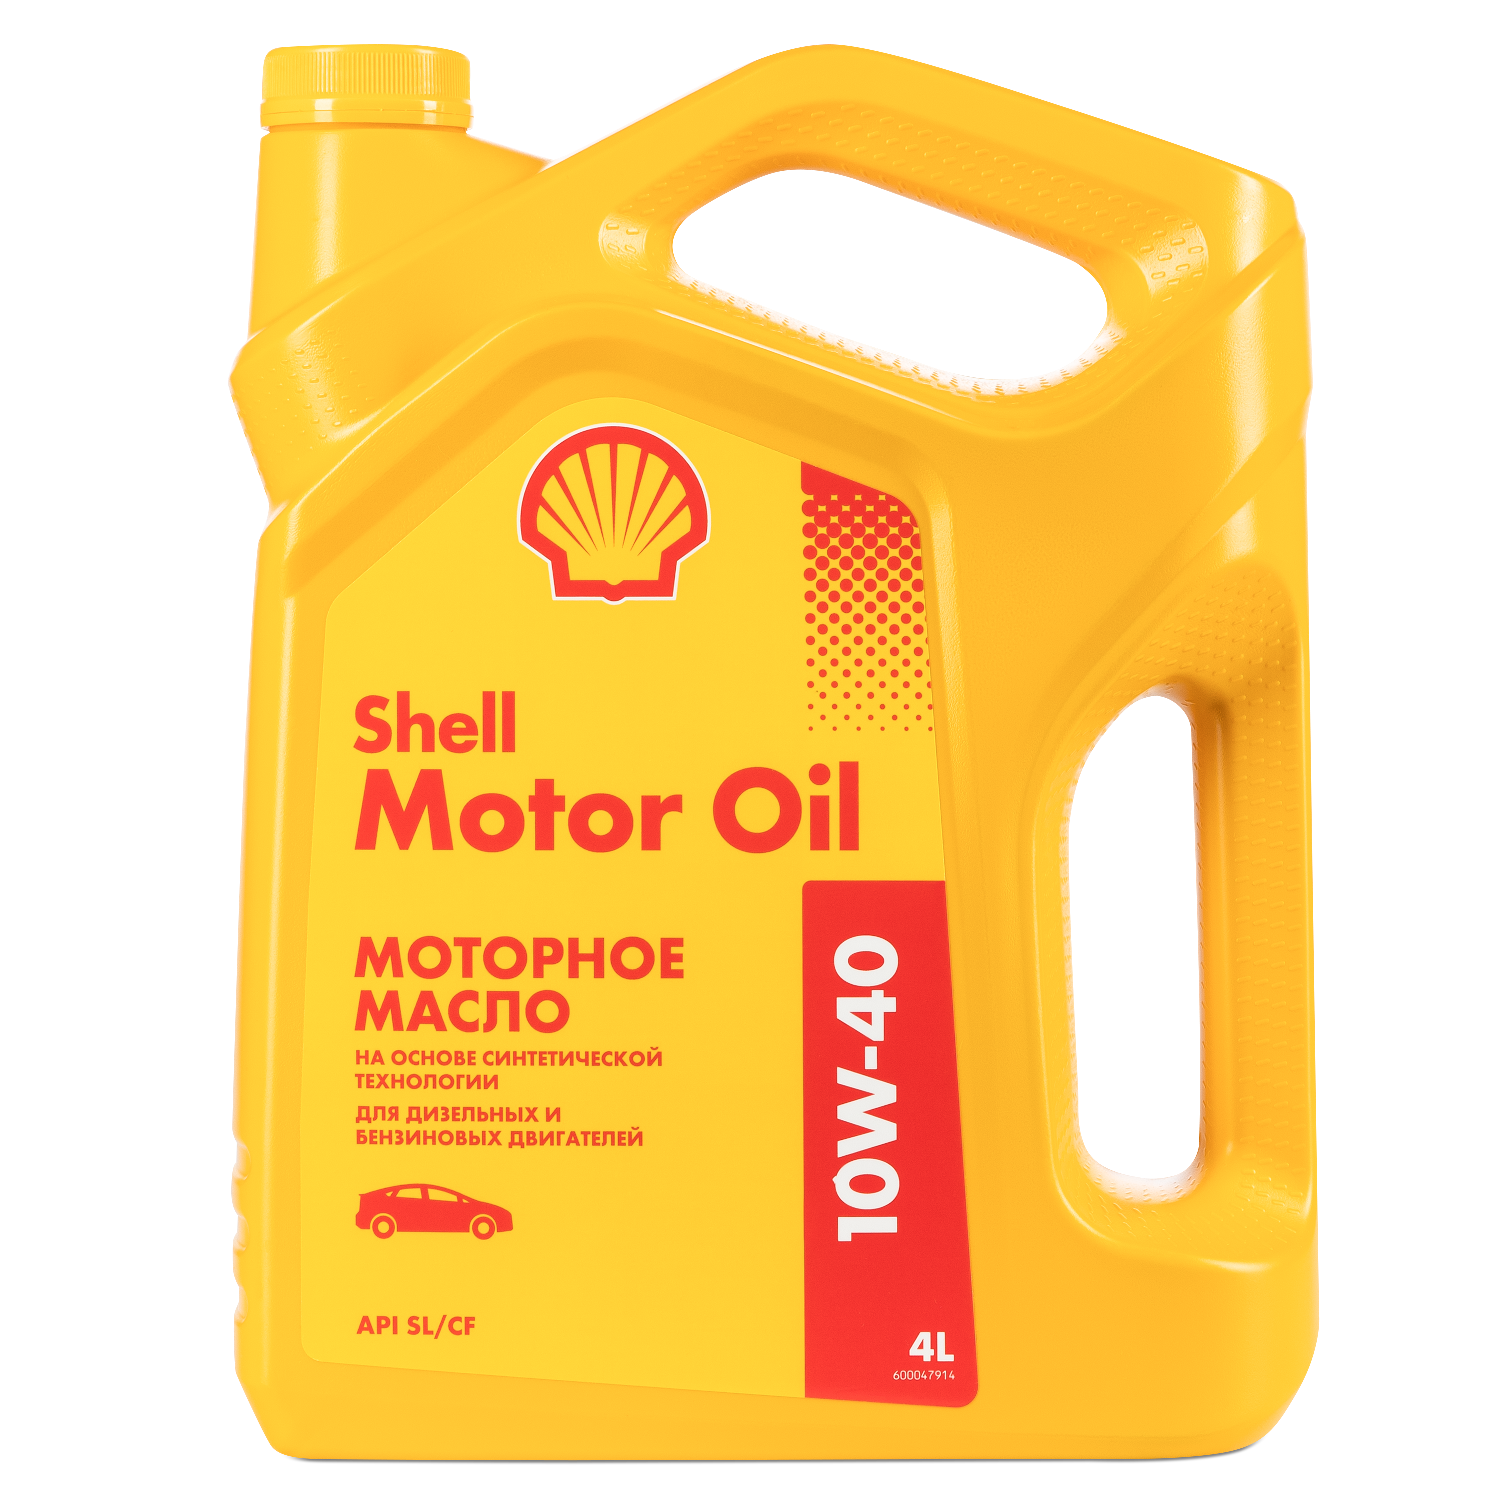 Купить Моторное масло Shell Motor Oil 10W-40, 4л 550051070 Shell | цена .